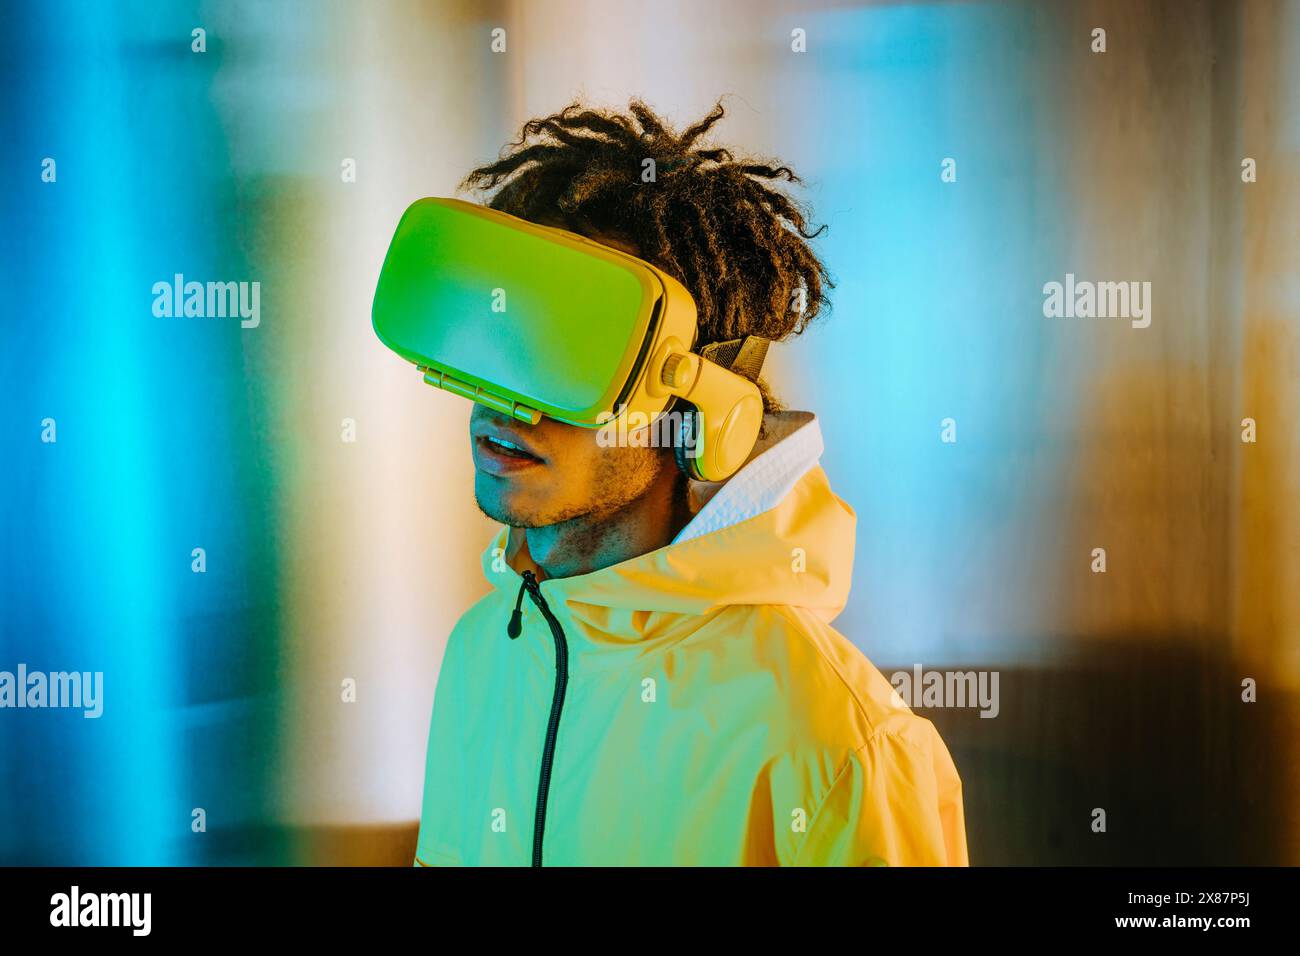 Man with dreads wearing virtual reality headset near illuminated wall Stock Photo